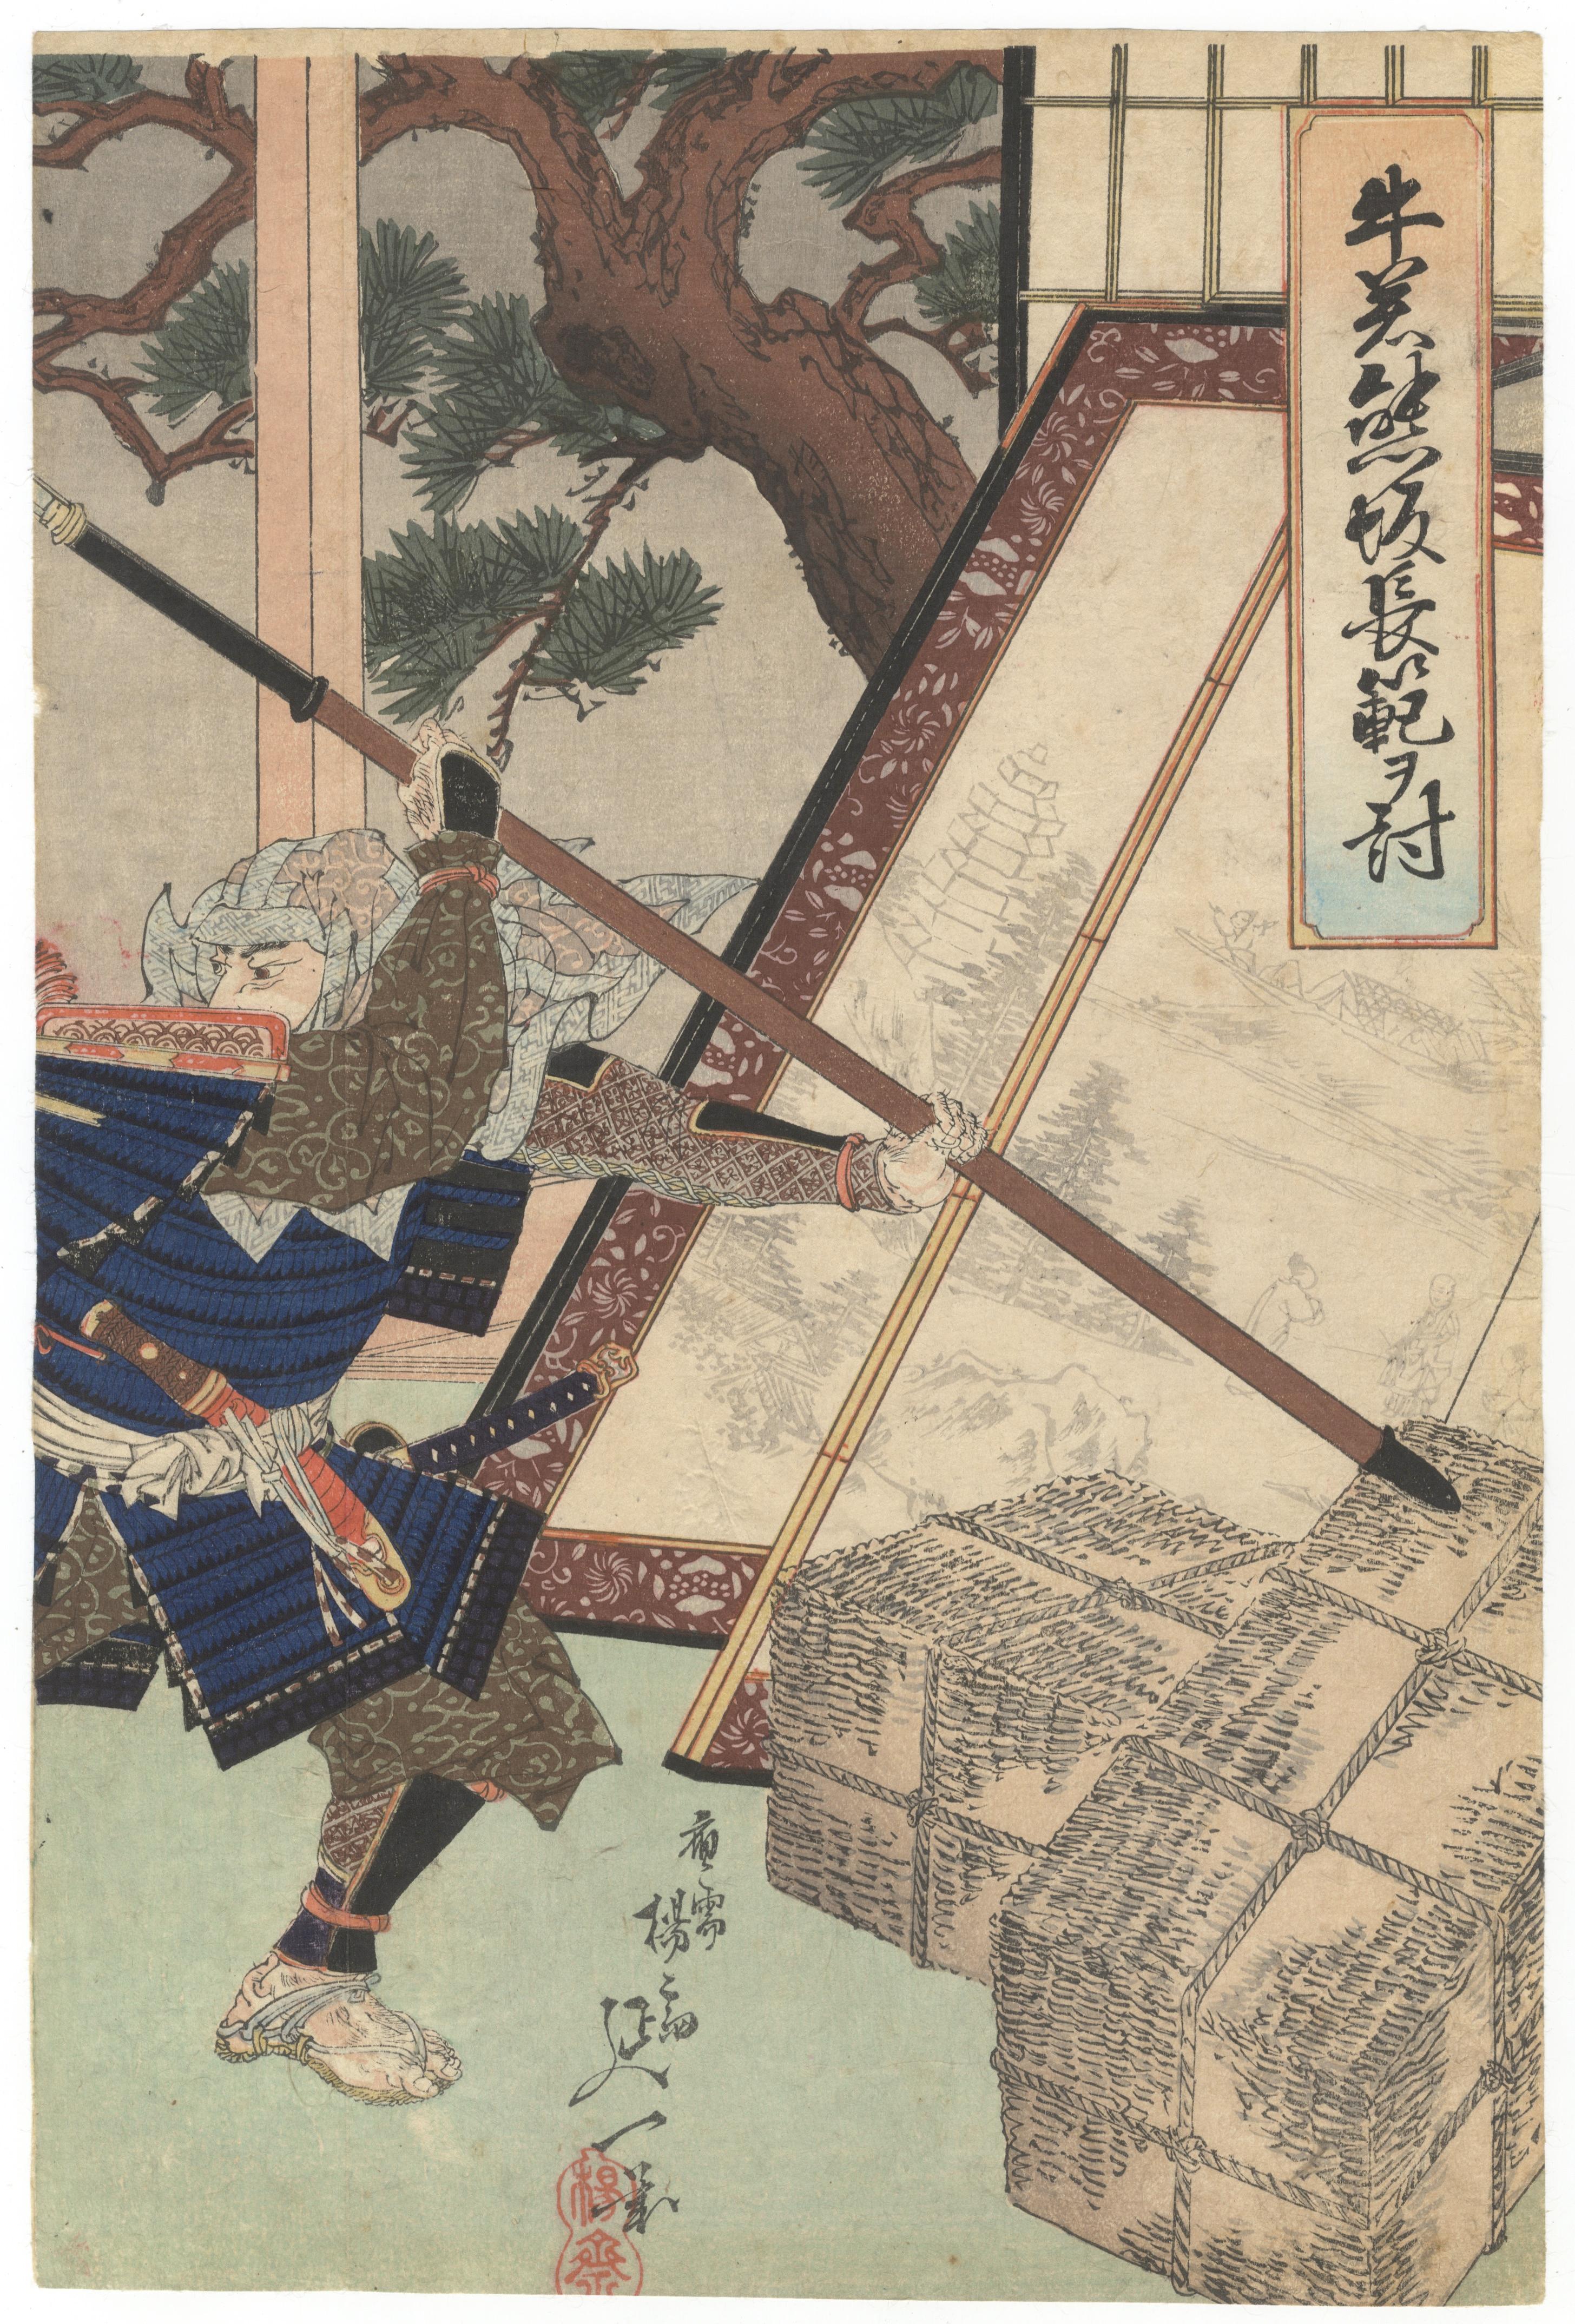 Artist: Nobukazu Yosai (1872-1944)
Title: Ushiwaka Battling Kumasaka Chohan
Publisher: Yokoyama Ryohachi 
Date: 1887
Dimensions: (L) 23.5 x 35.6 (C) 23.6 x 35.4 (R) 23.7 x 35.5 cm 

This dynamic composition shows the young Ushiwakamaru defending an